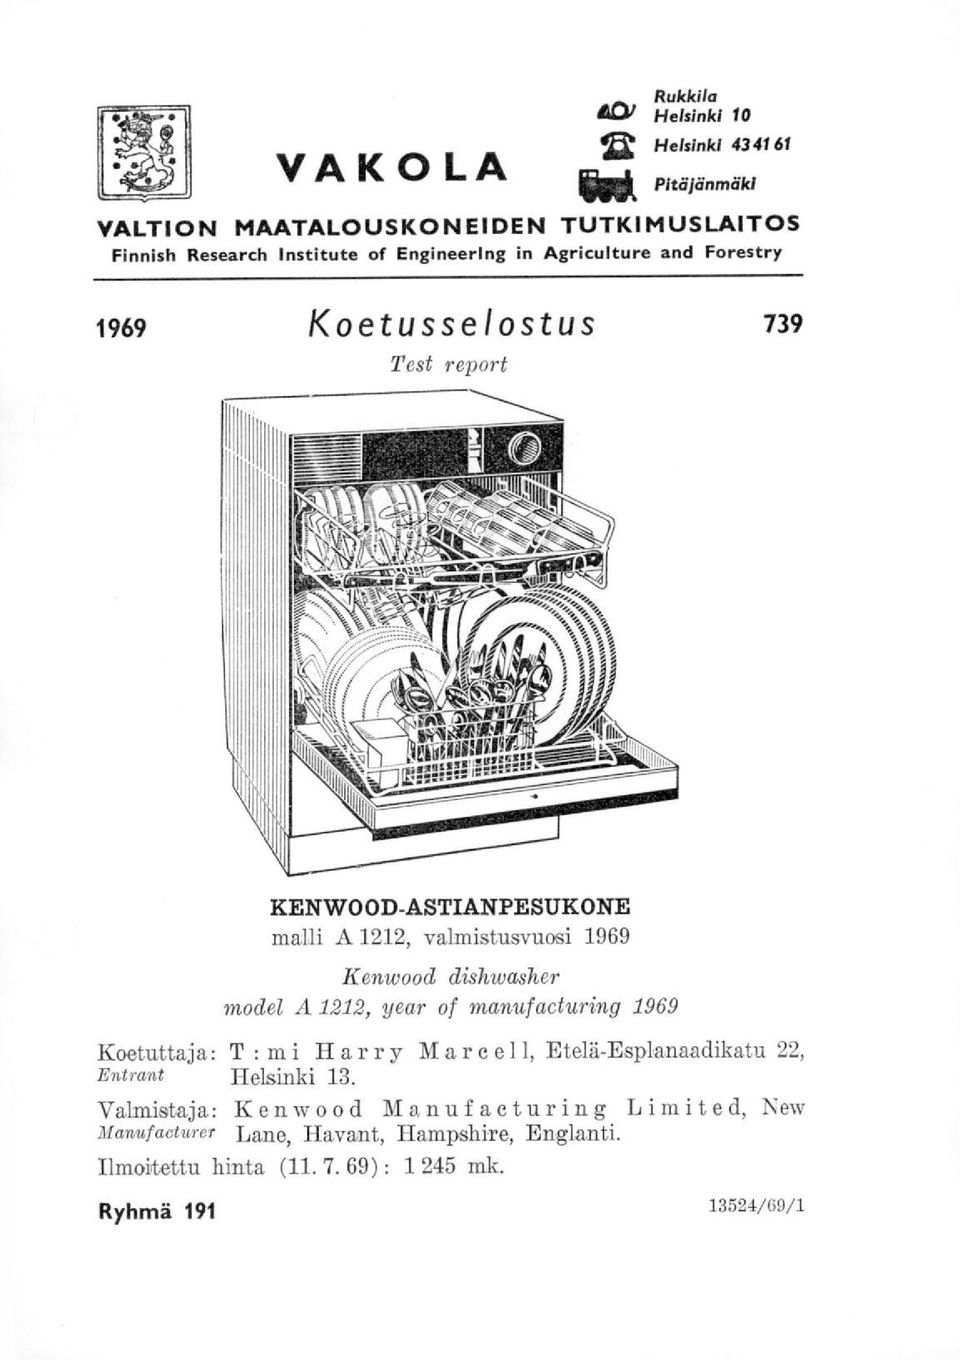 dishwasher rnodel A 1212, year of manufacturing 1969 Koetuttaja: T : mi Harry Marcel 1, Etelä-Esplanaadikatu 22, Entrant Helsinki 13.